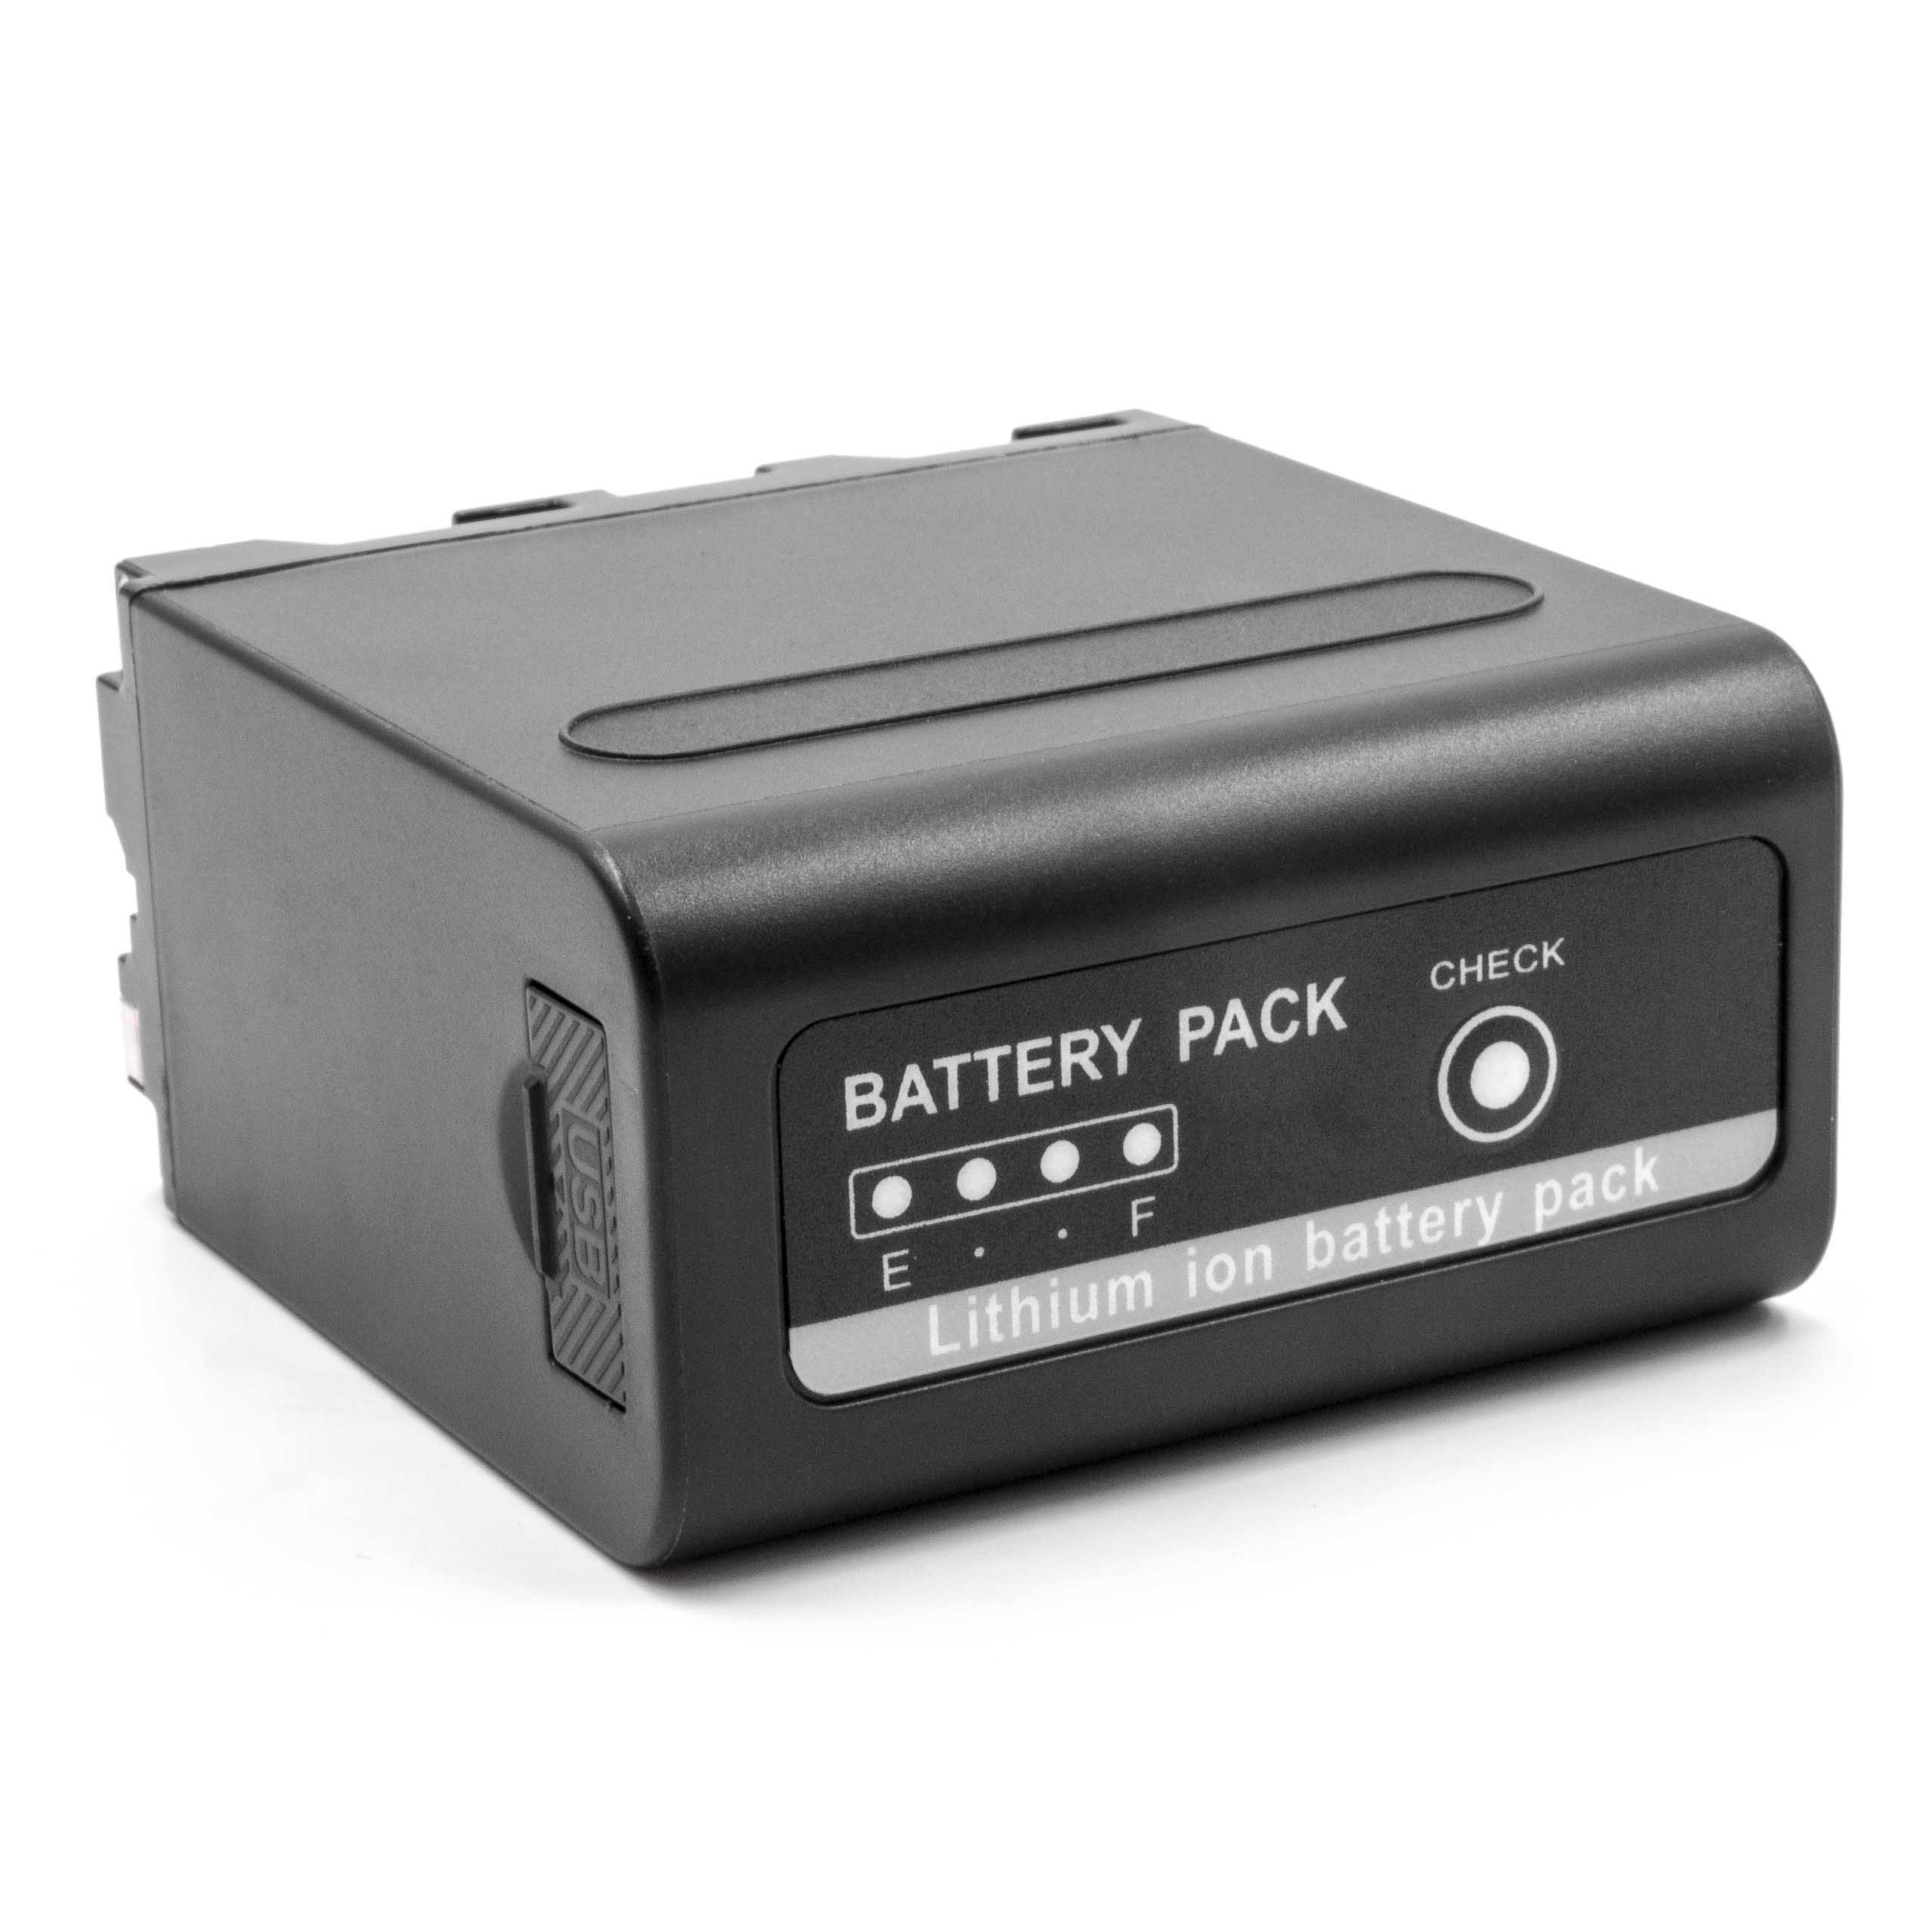 Batteria per videocamera sostituisce Sony NP-F930, NP-F930/B Grundig - 10200mAh 7,4V Li-Ion con presa USB